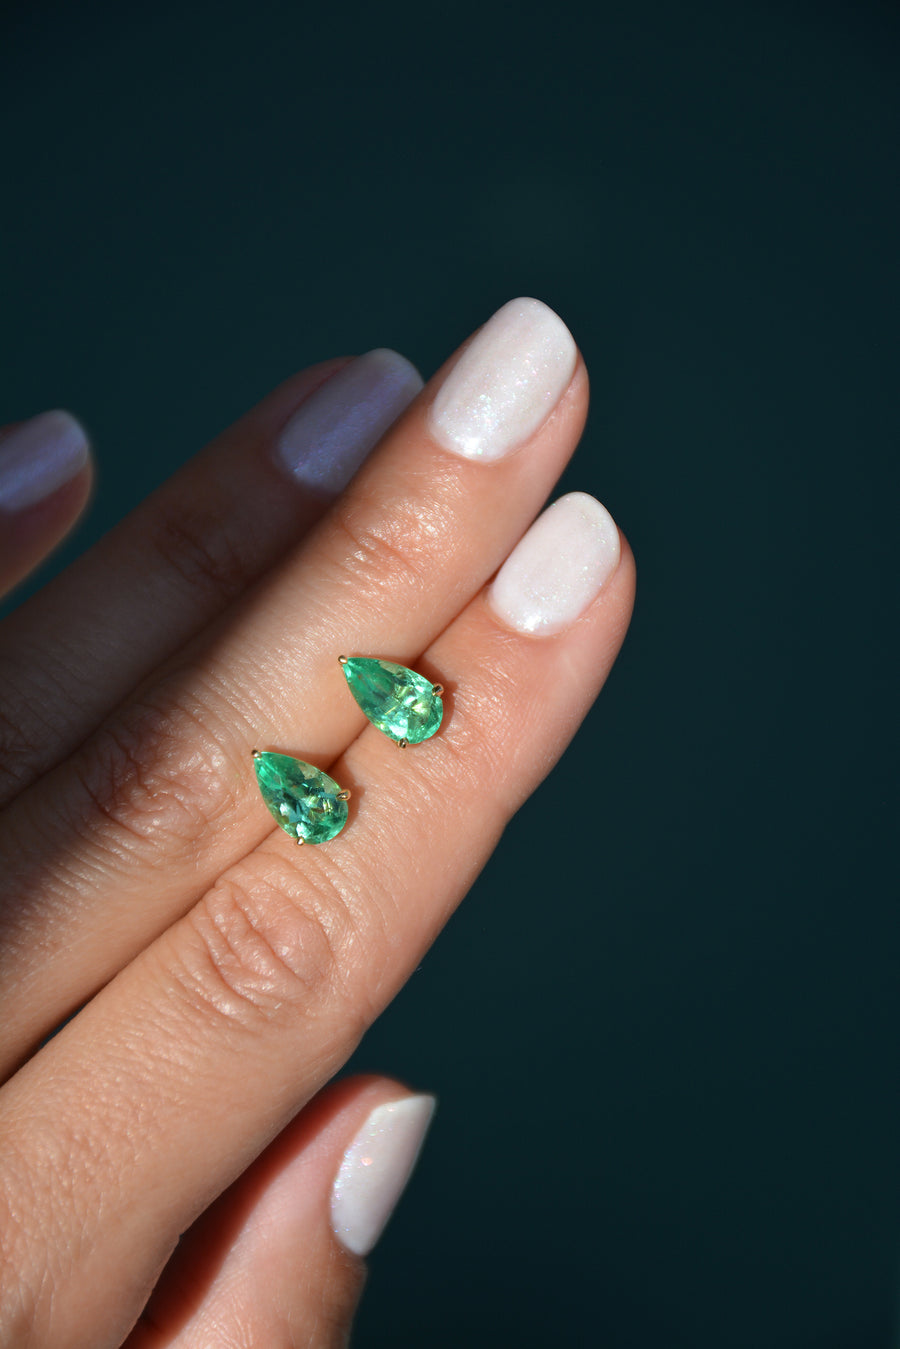 The Aqua Green Colombian Emerald Stud Earrings